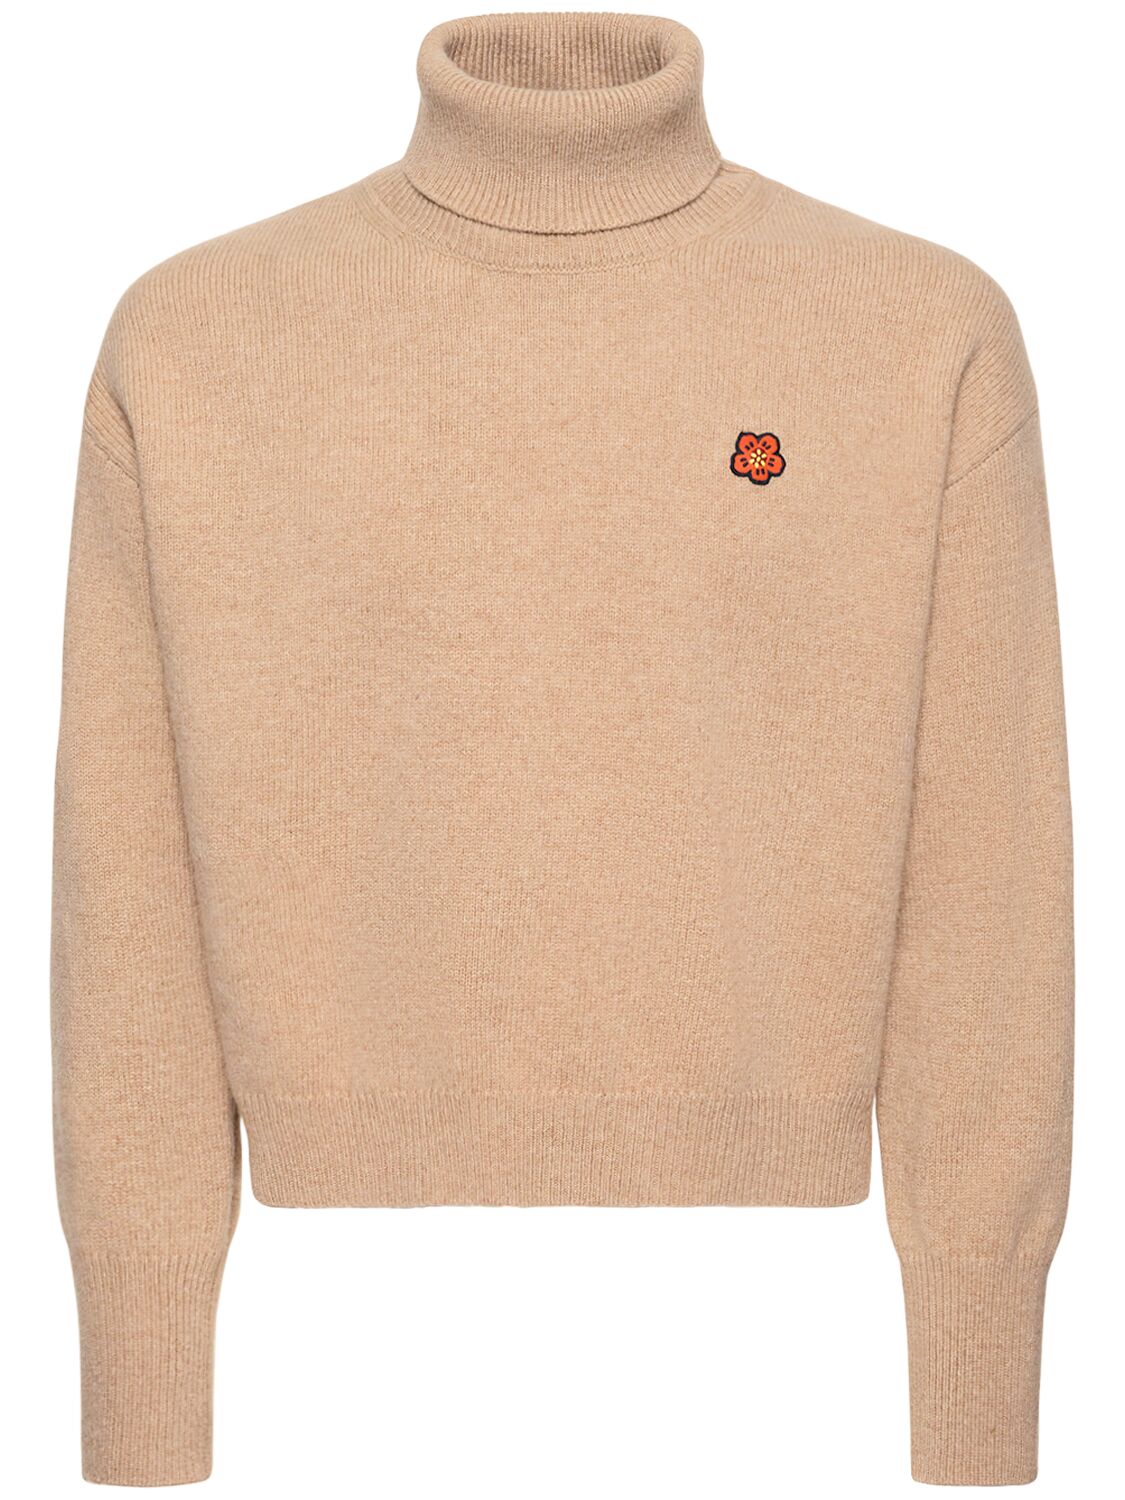 Crest Boxy Turtleneck Wool Sweater